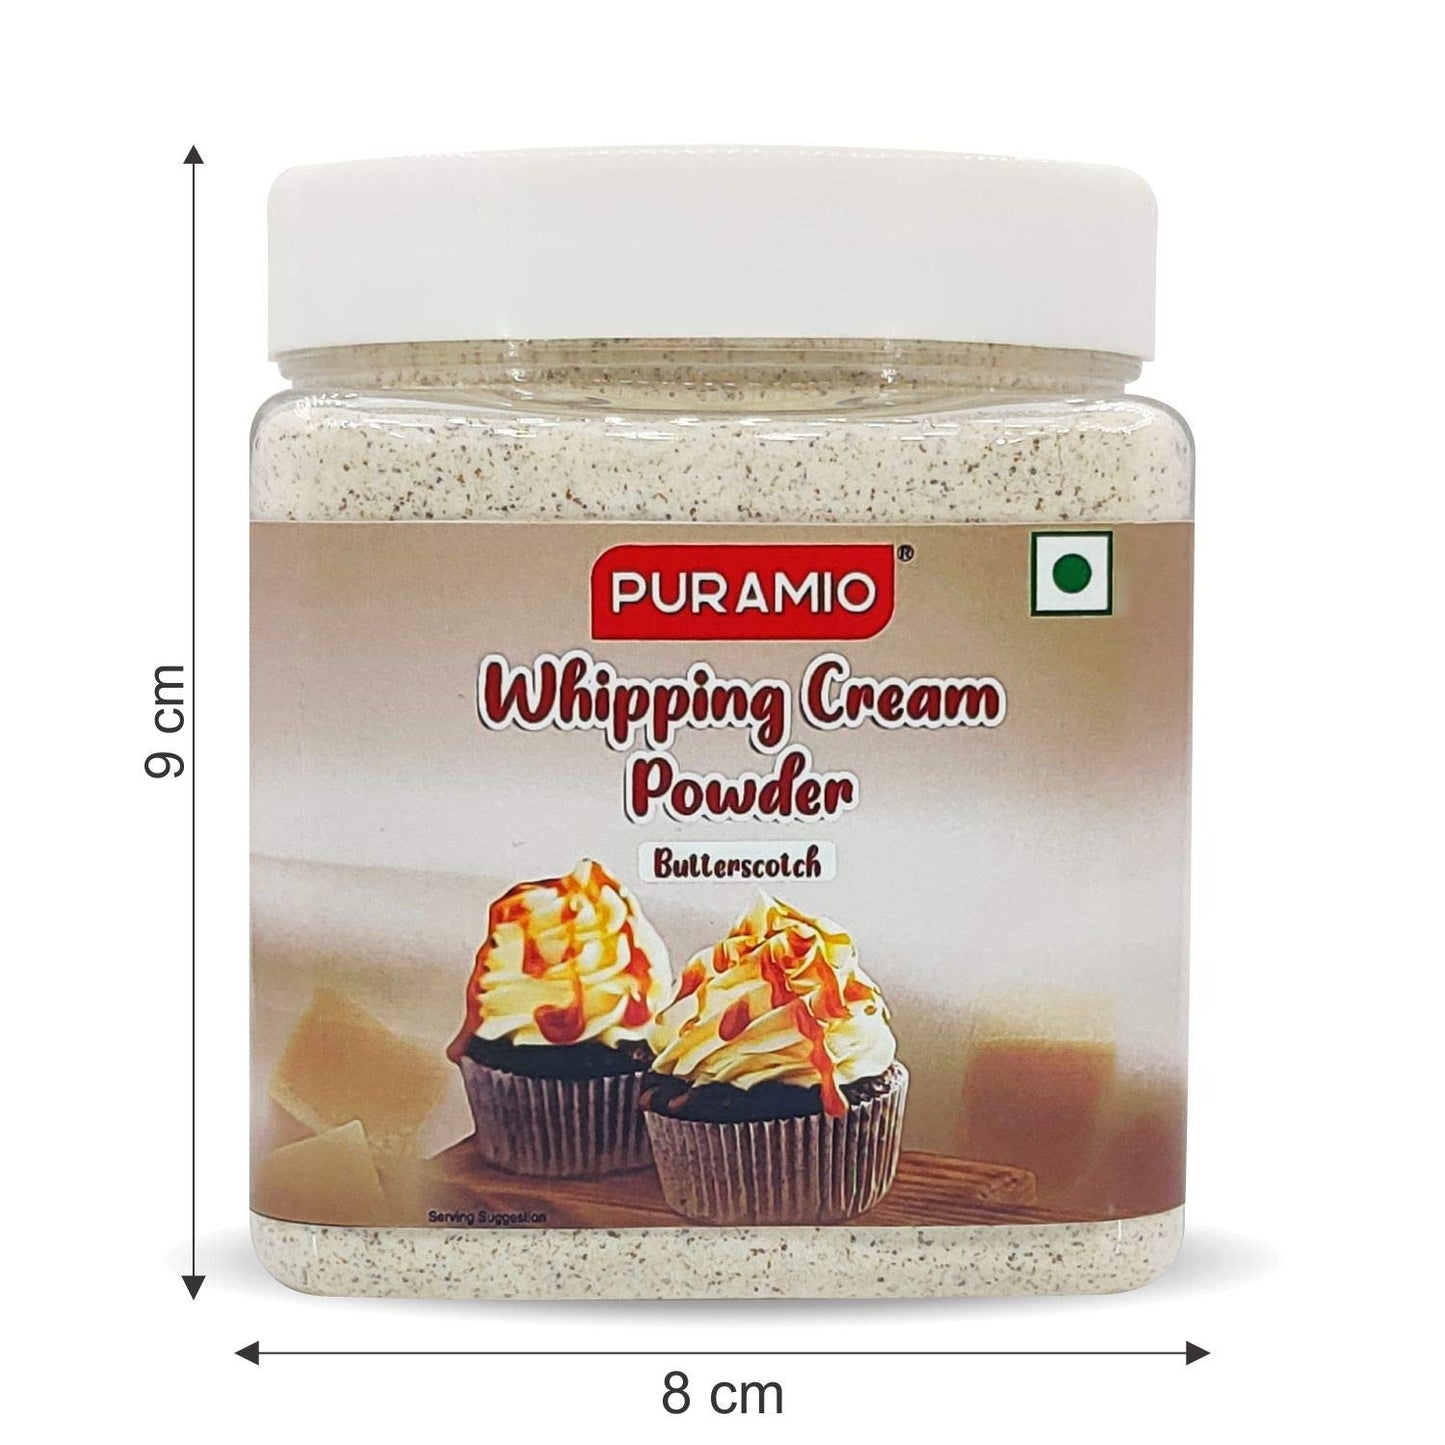 Puramio Whipping Cream Powder Combo Pack of- Vanilla & Butterscotch, (250g x 2)